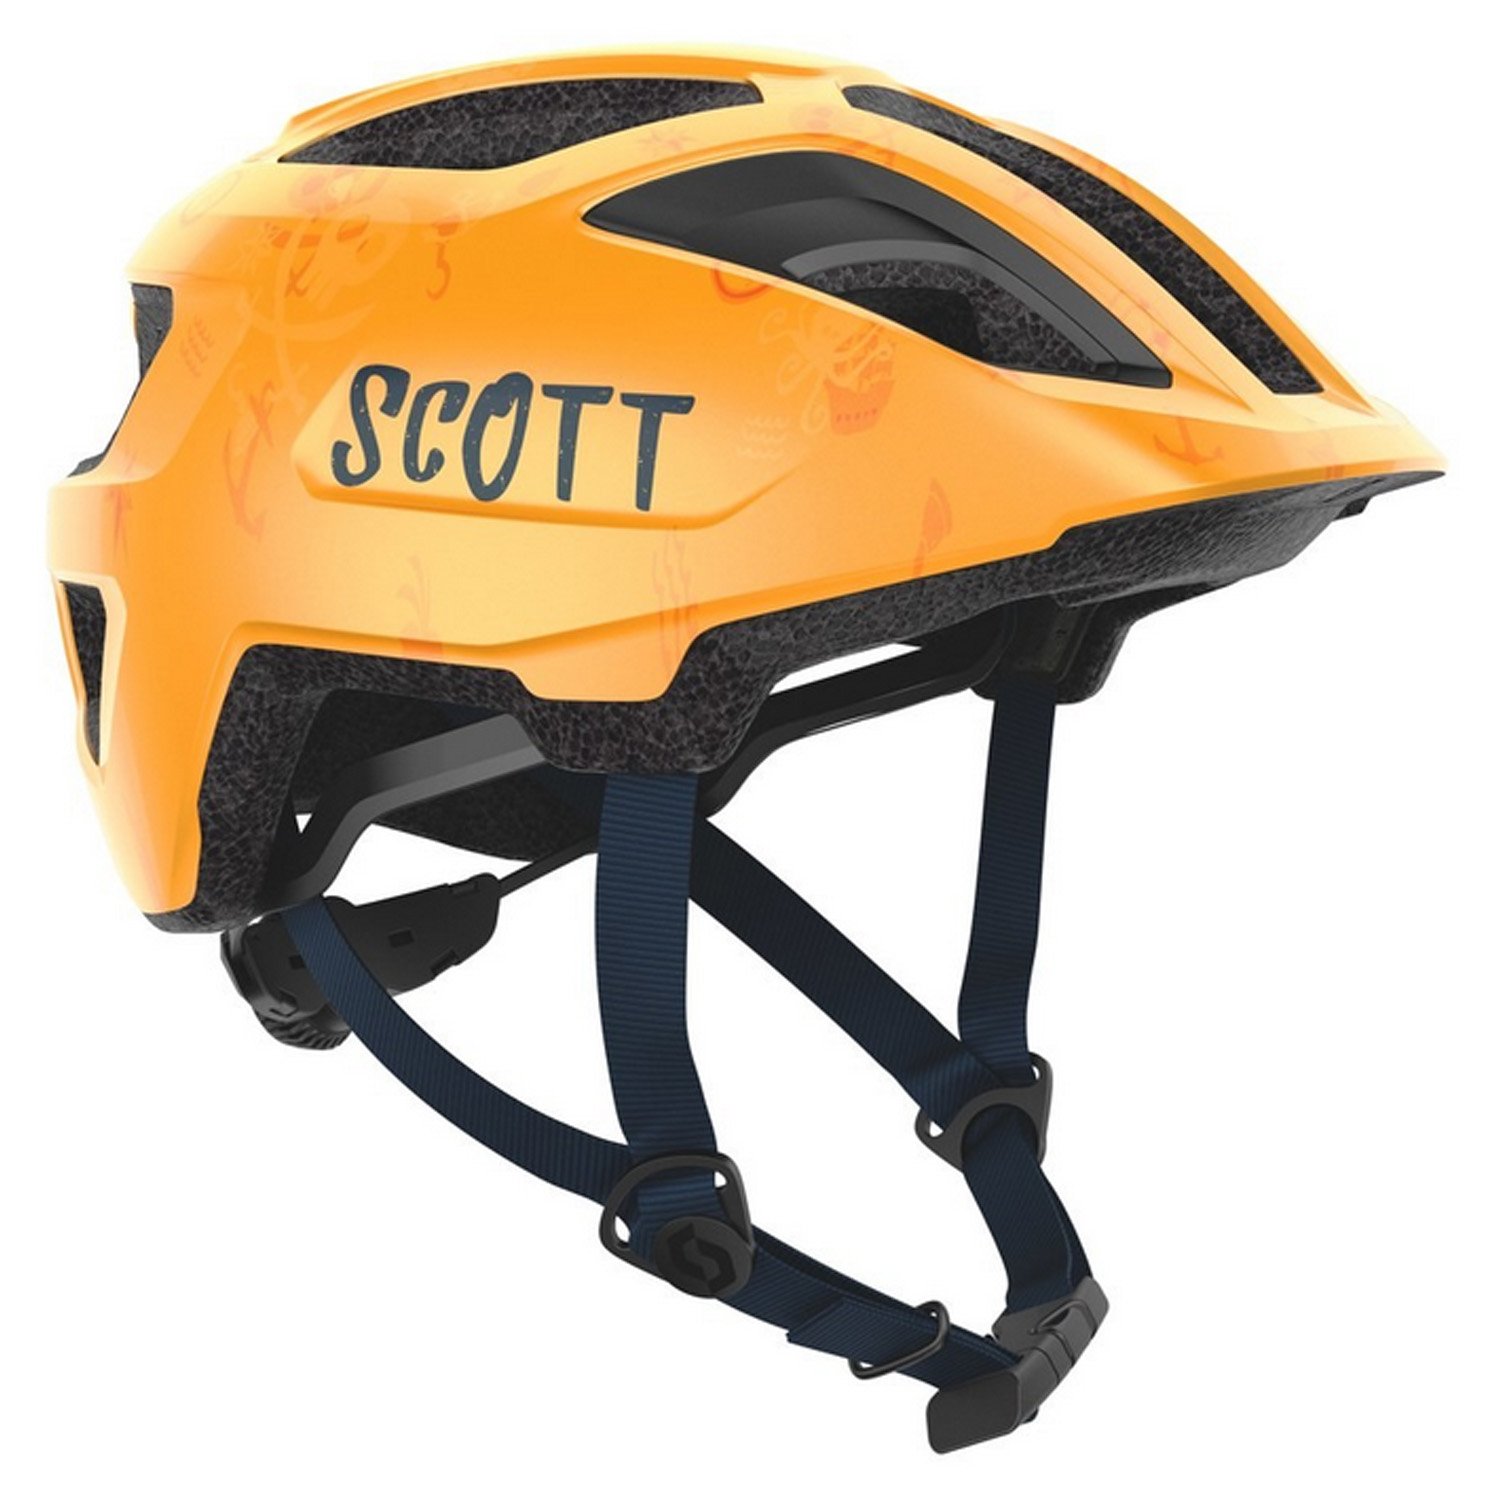 Велошлем SCOTT Kid Spunto (CE), fire orange, ES275235-6522 шлем велосипедный scott spunto kid red orange onesize 50 56 см 2019 270115 1045